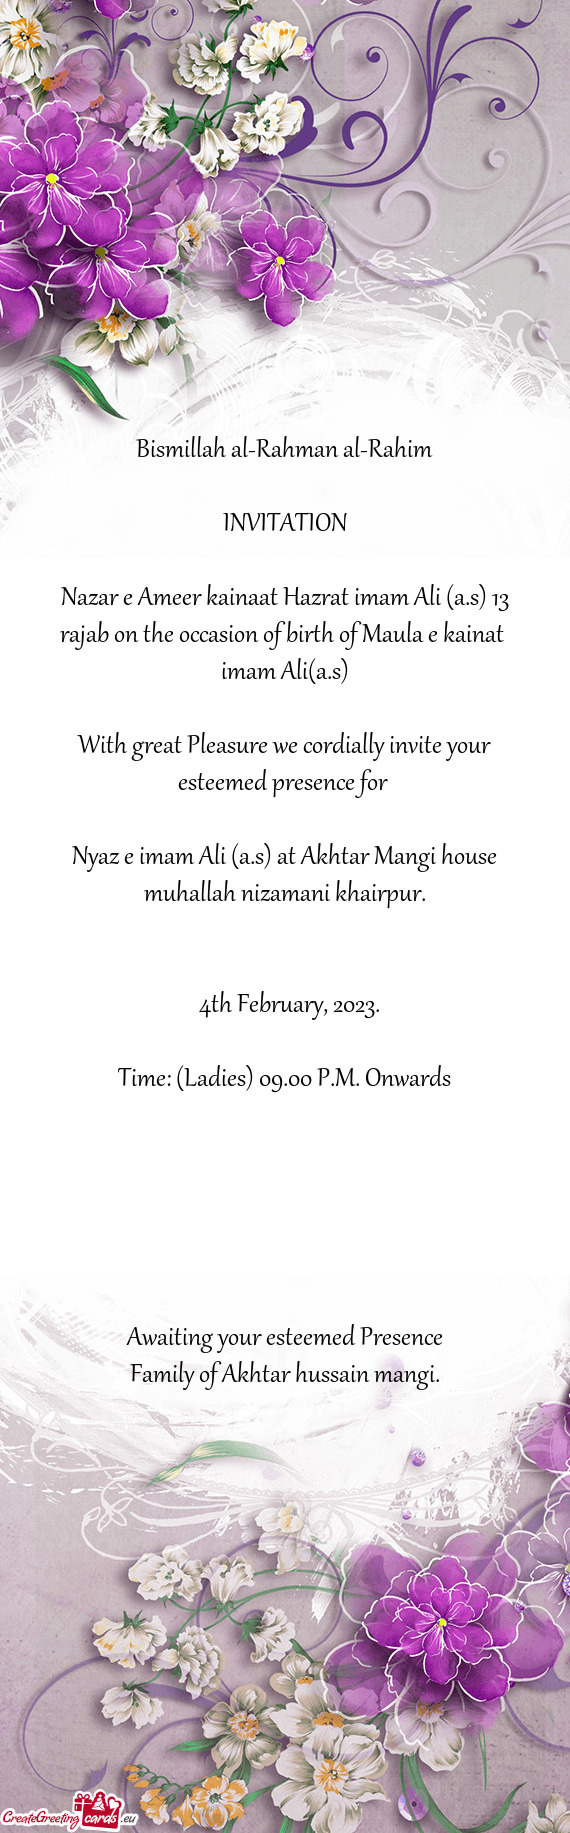 Nazar e Ameer kainaat Hazrat imam Ali (a.s) 13 rajab on the occasion of birth of Maula e kainat ima